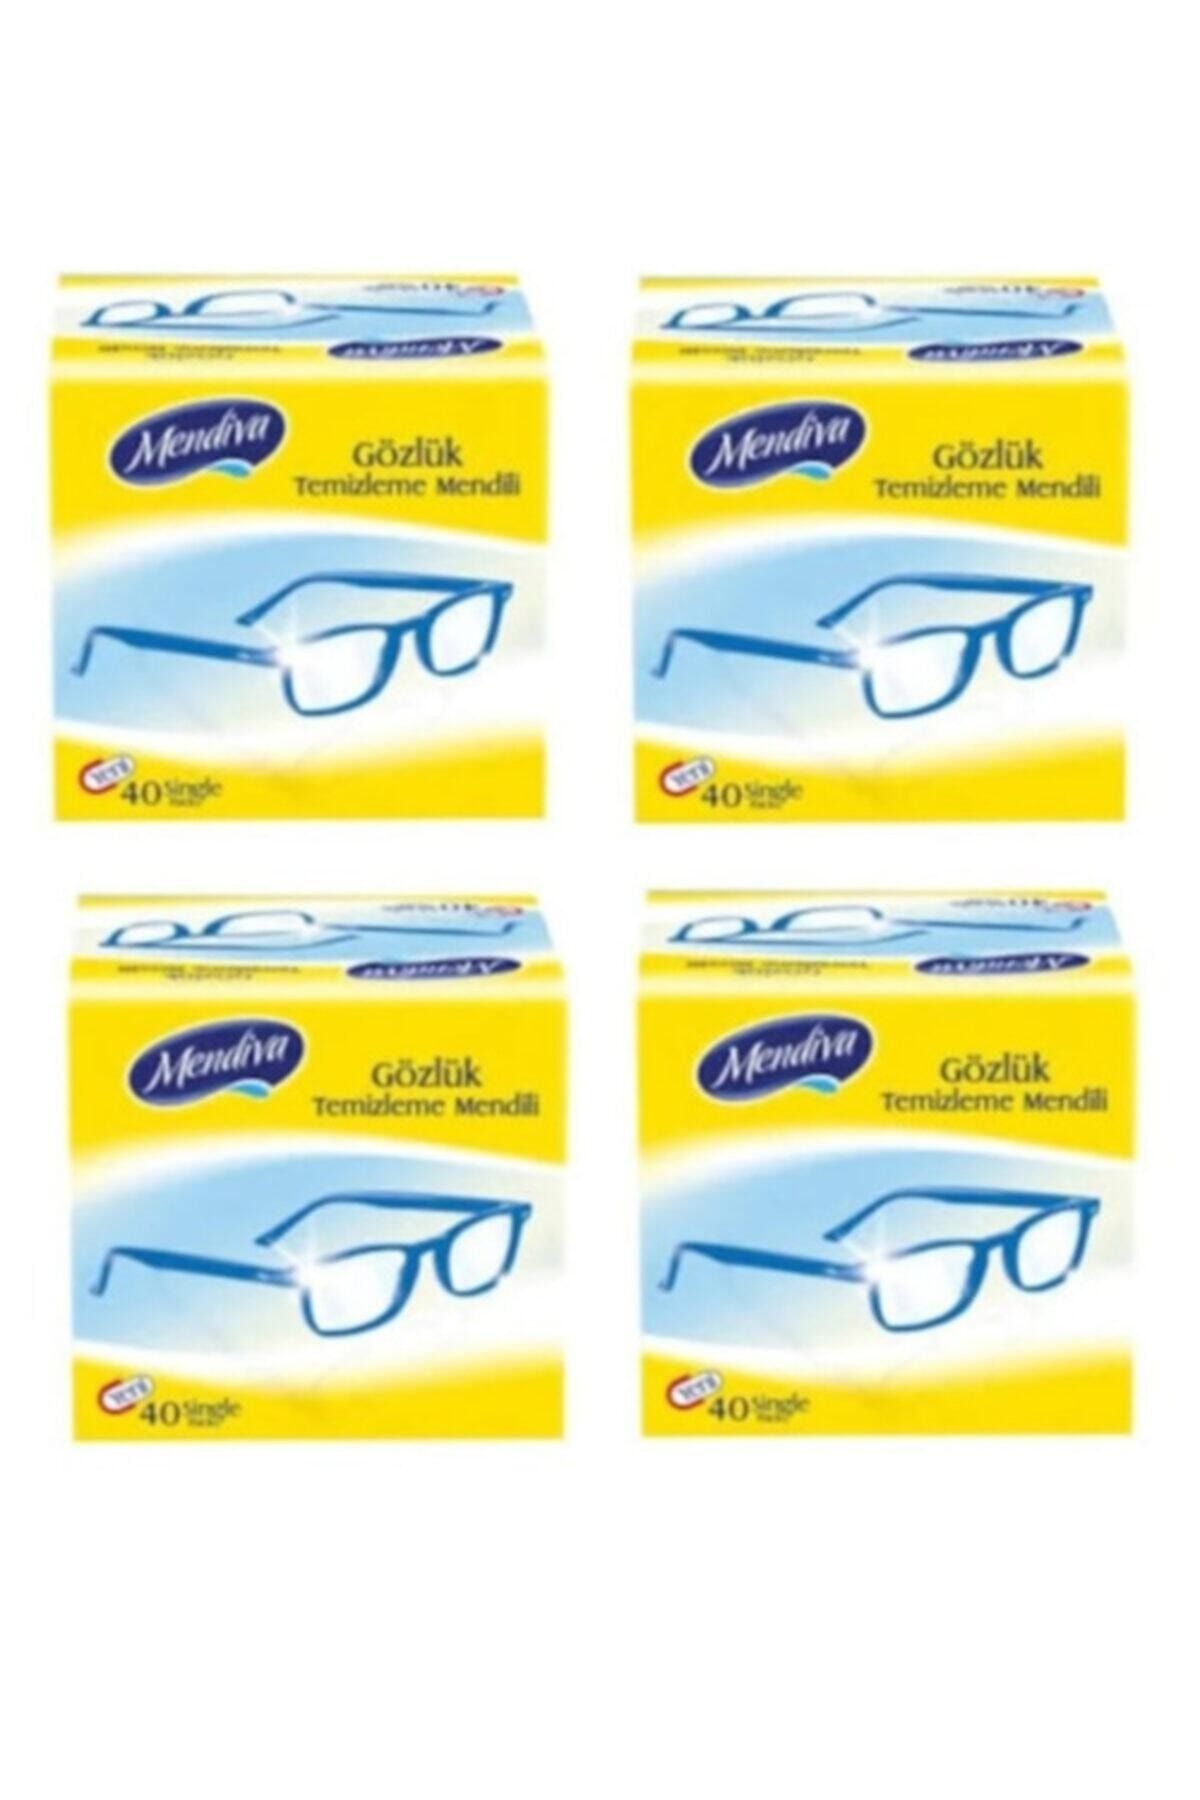 Cool Mendiva Gözlük Temizleme Mendili 40'lı 4 Paket